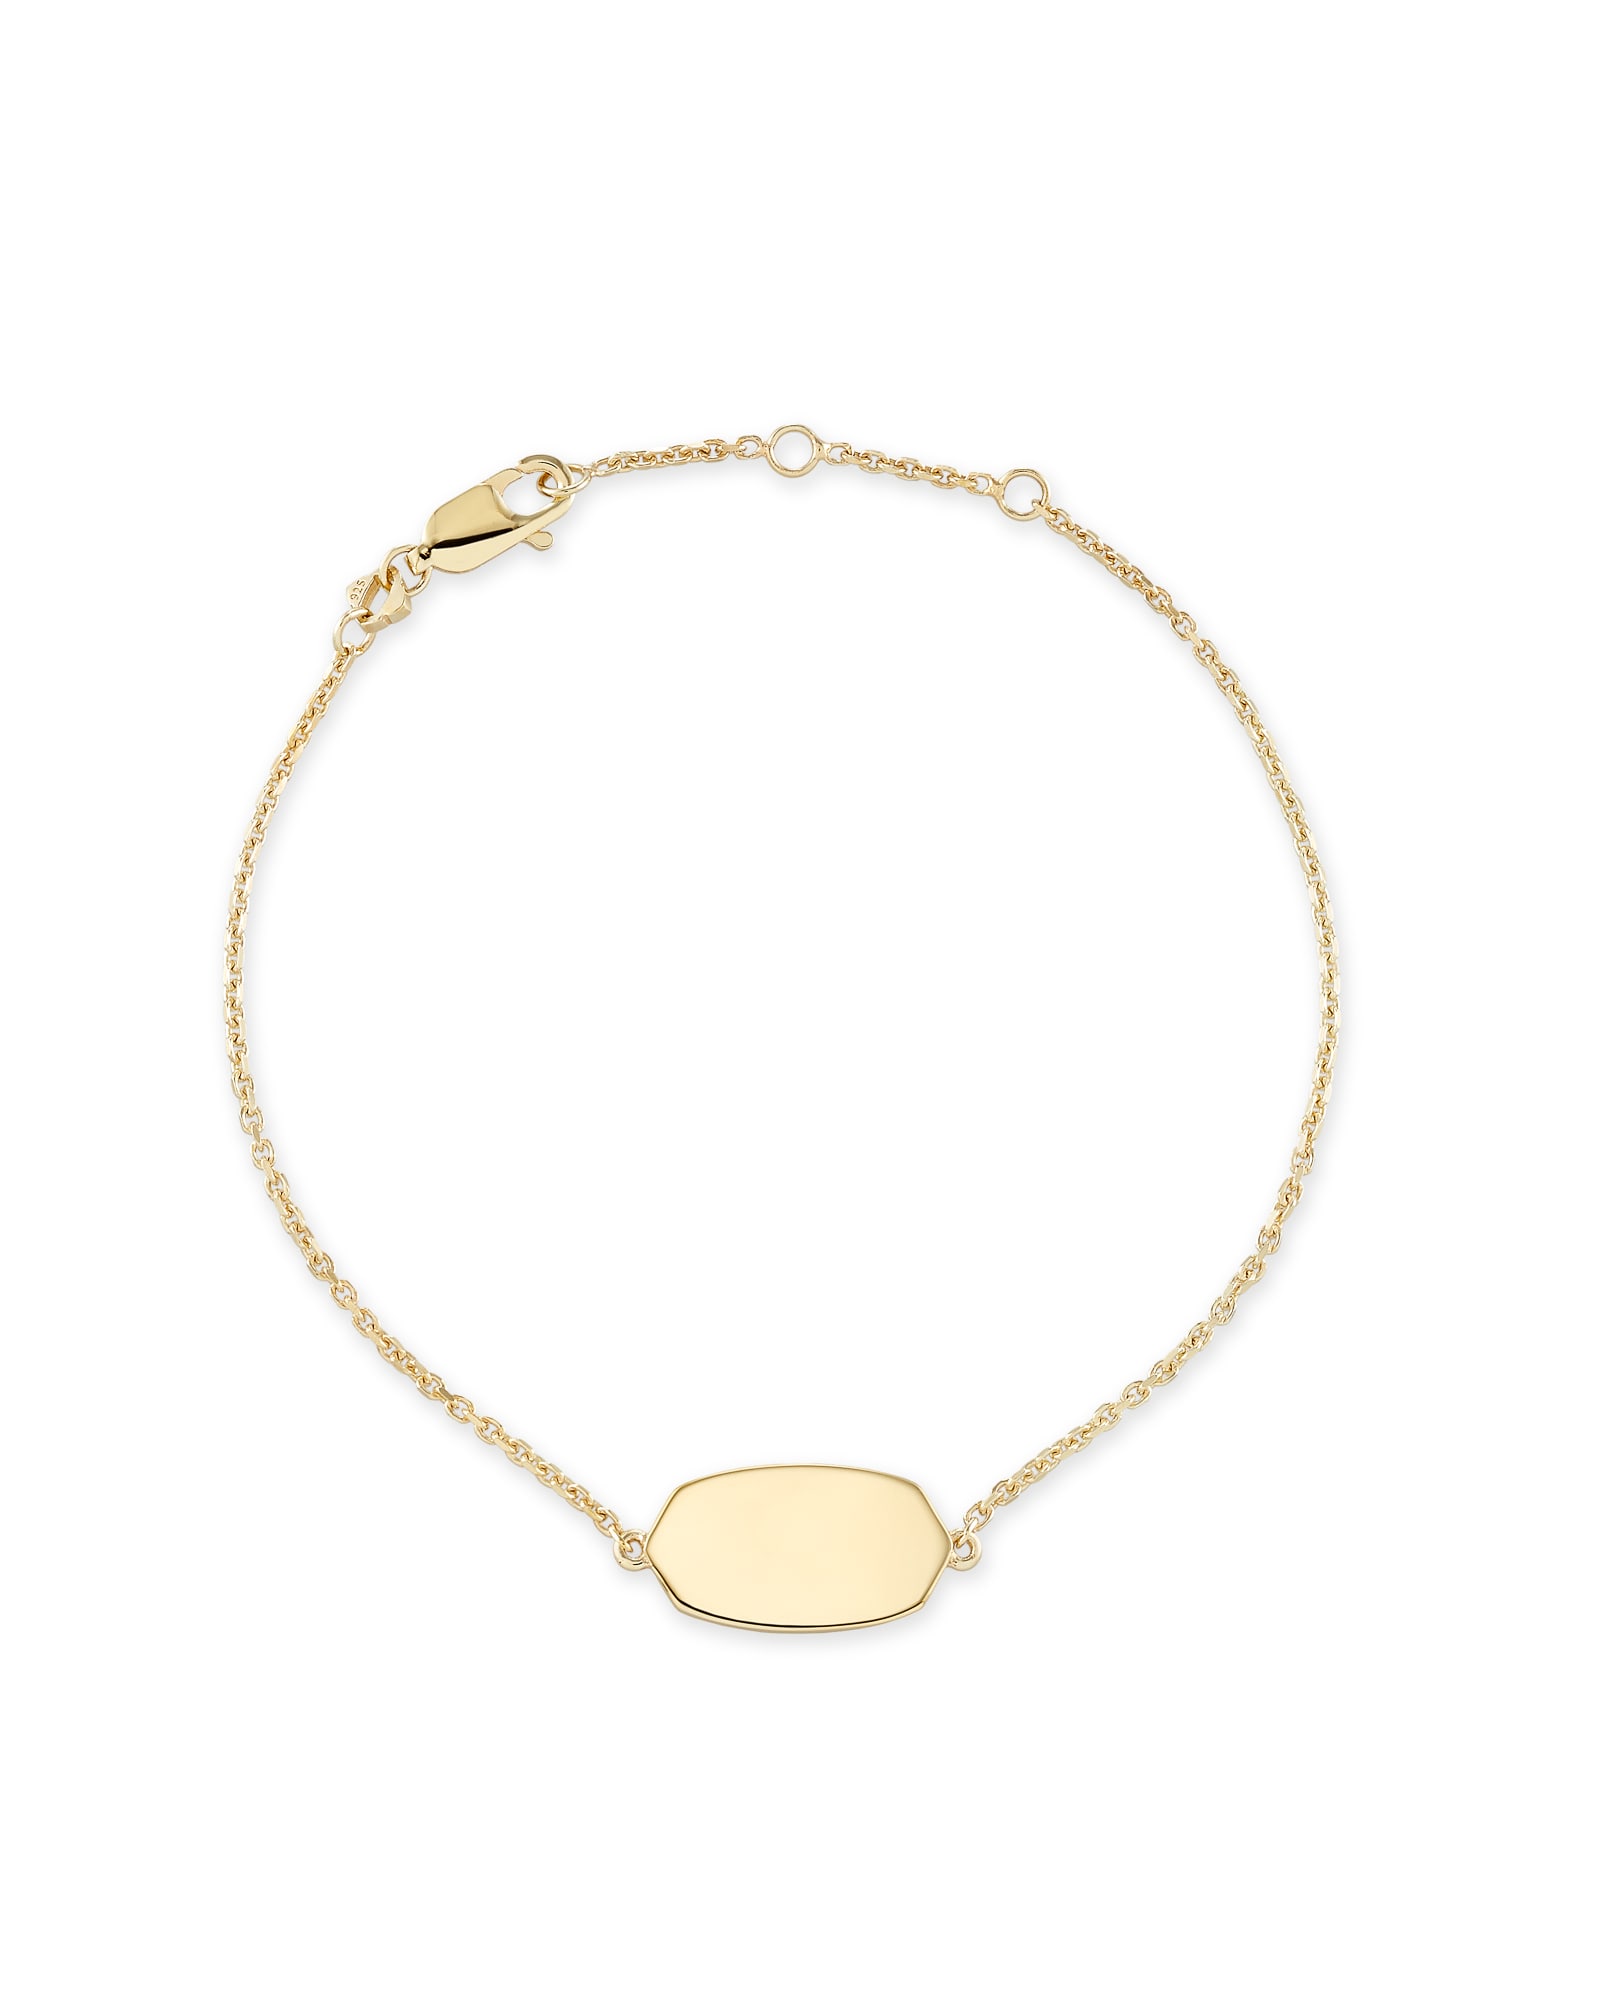 Kendra Scott Elaina Delicate Chain Bracelet in 18k Gold Vermeil | Sterling Silver